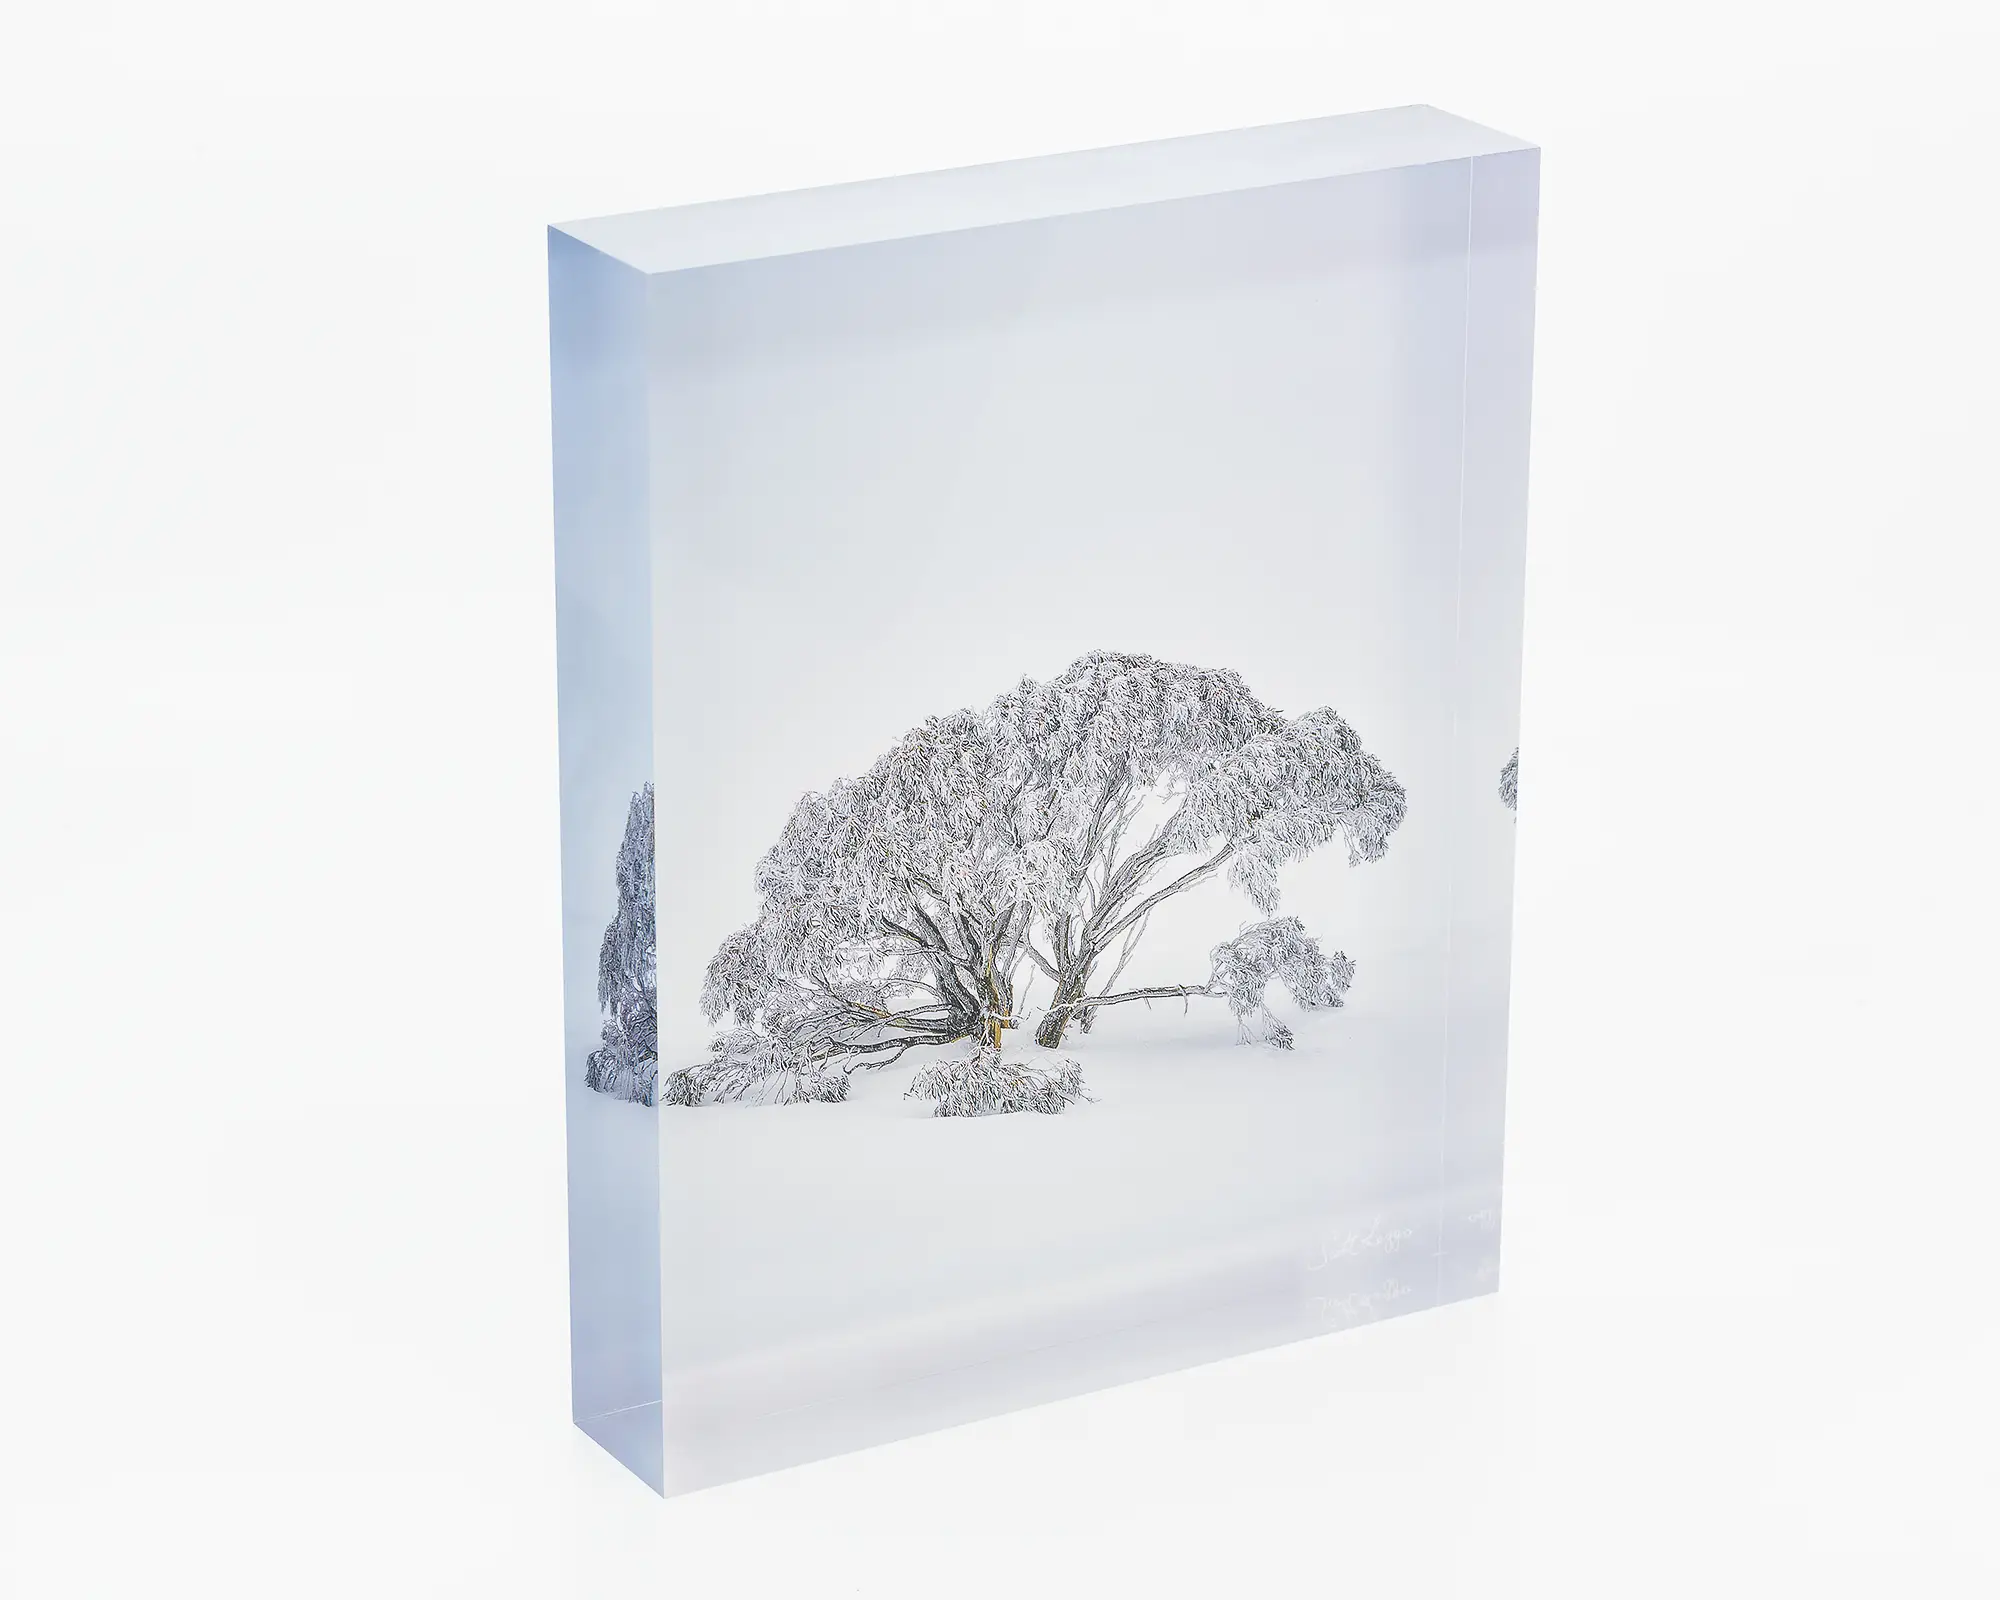 Chilled - Acrylic block snow gum in snow, Mount Hotham